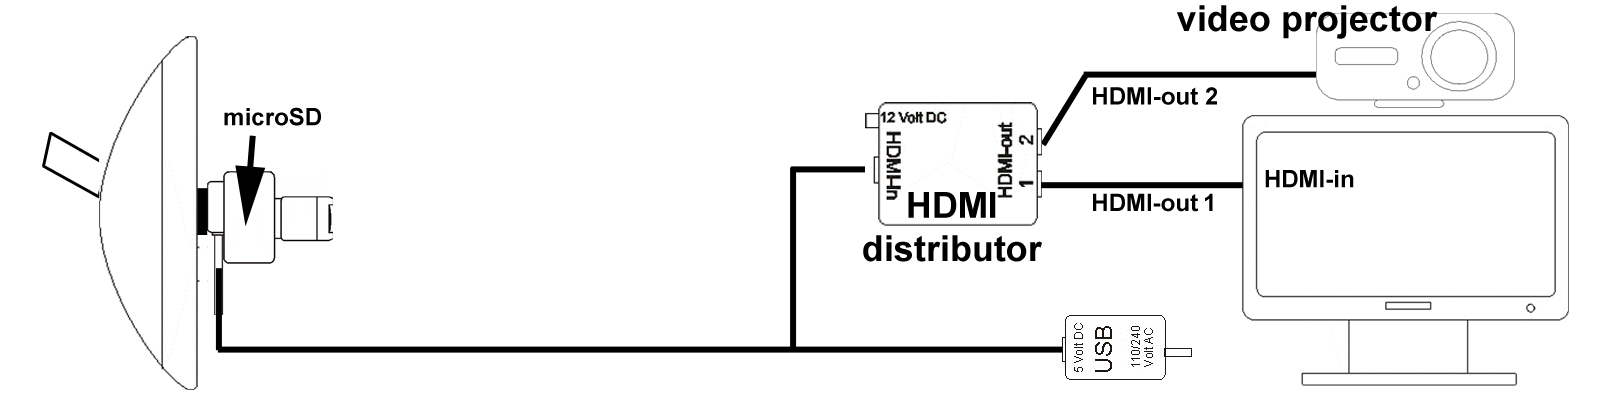 diagram thirdeye uni with video projector